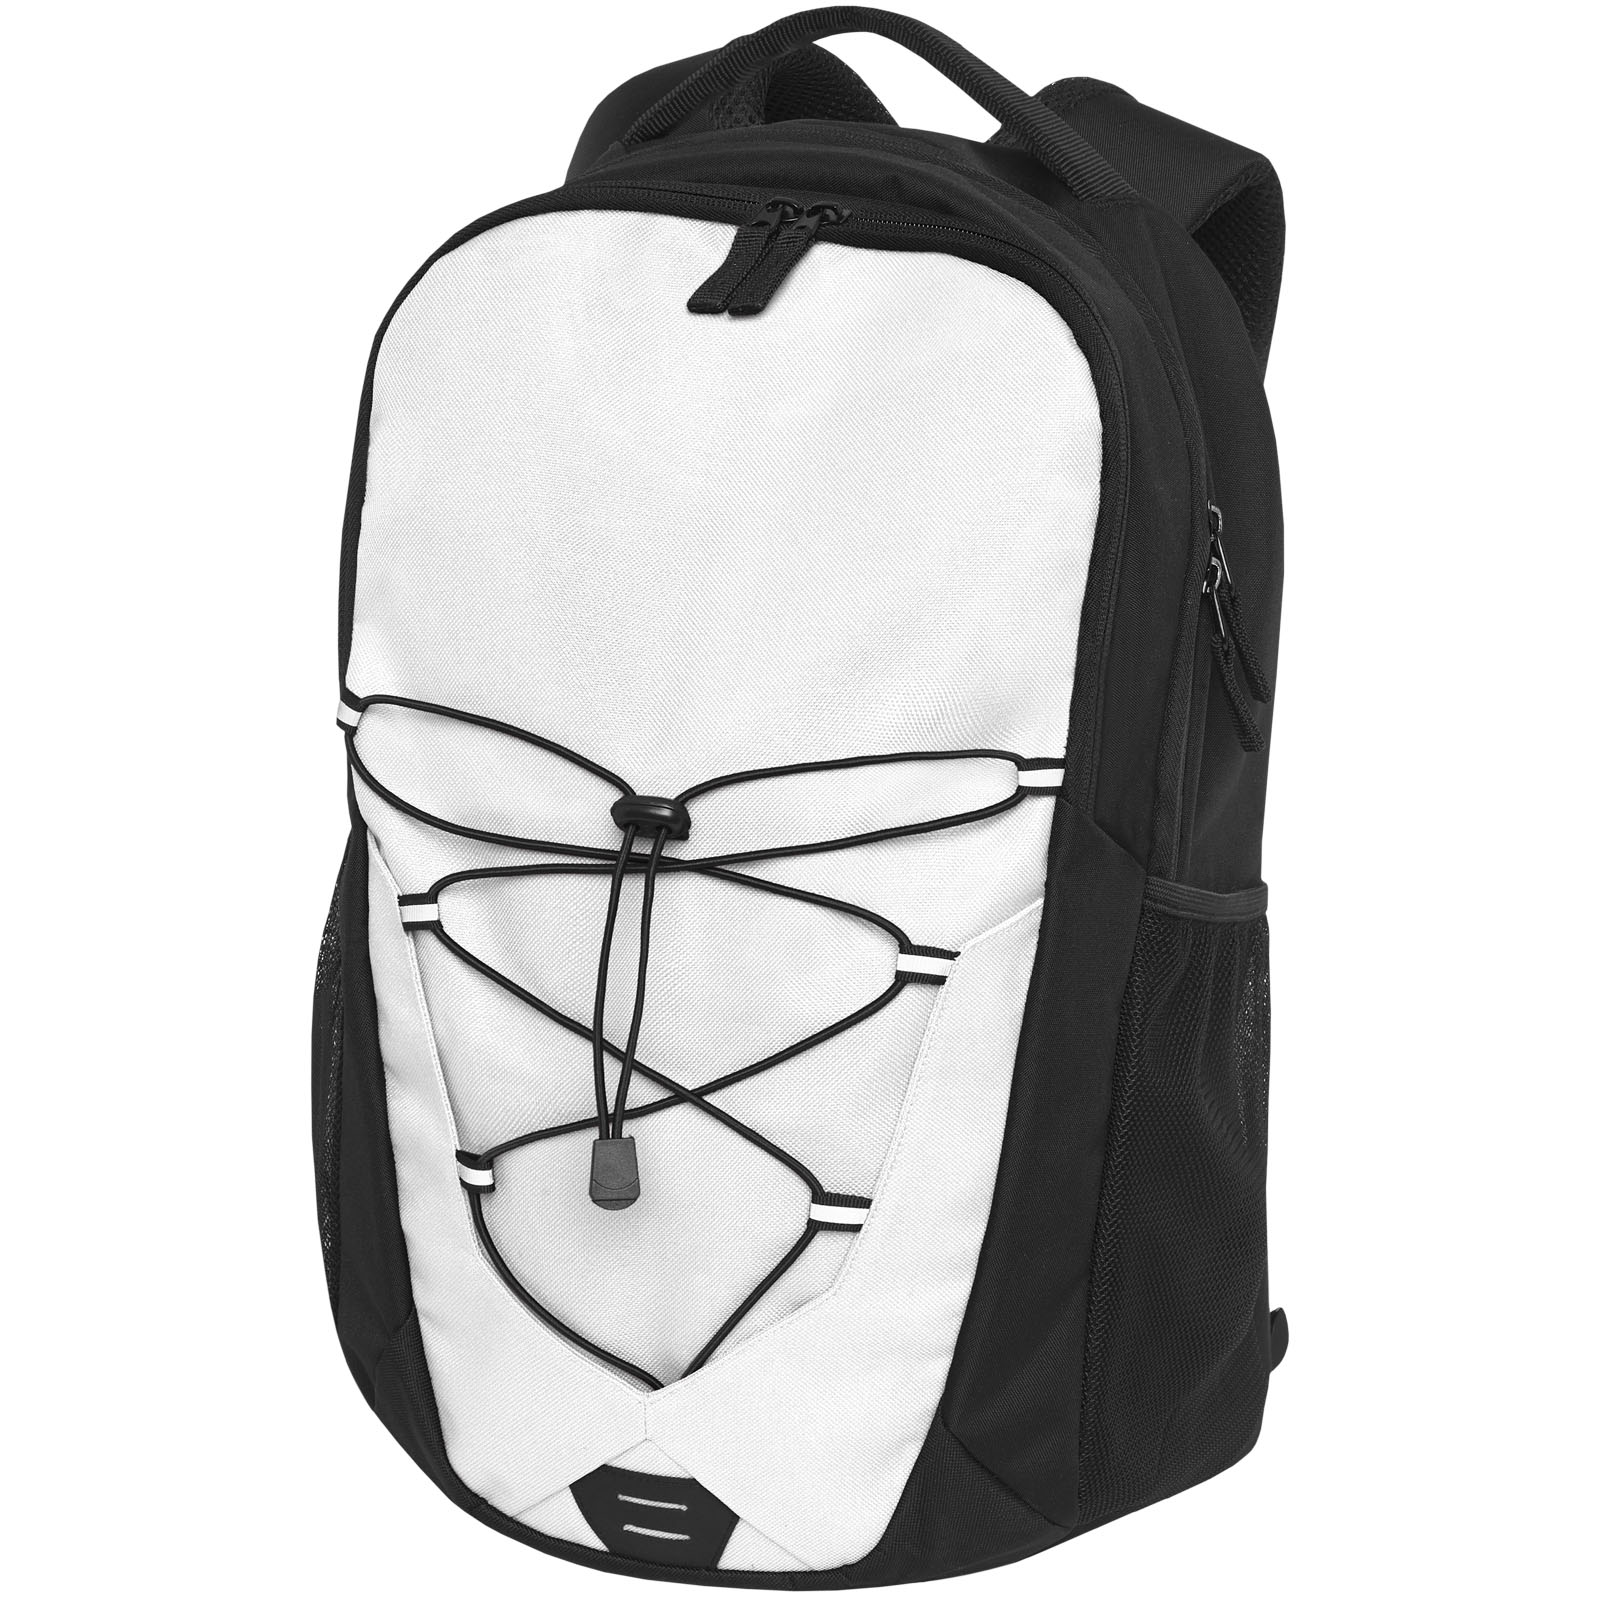 Bags - Trails backpack 24L